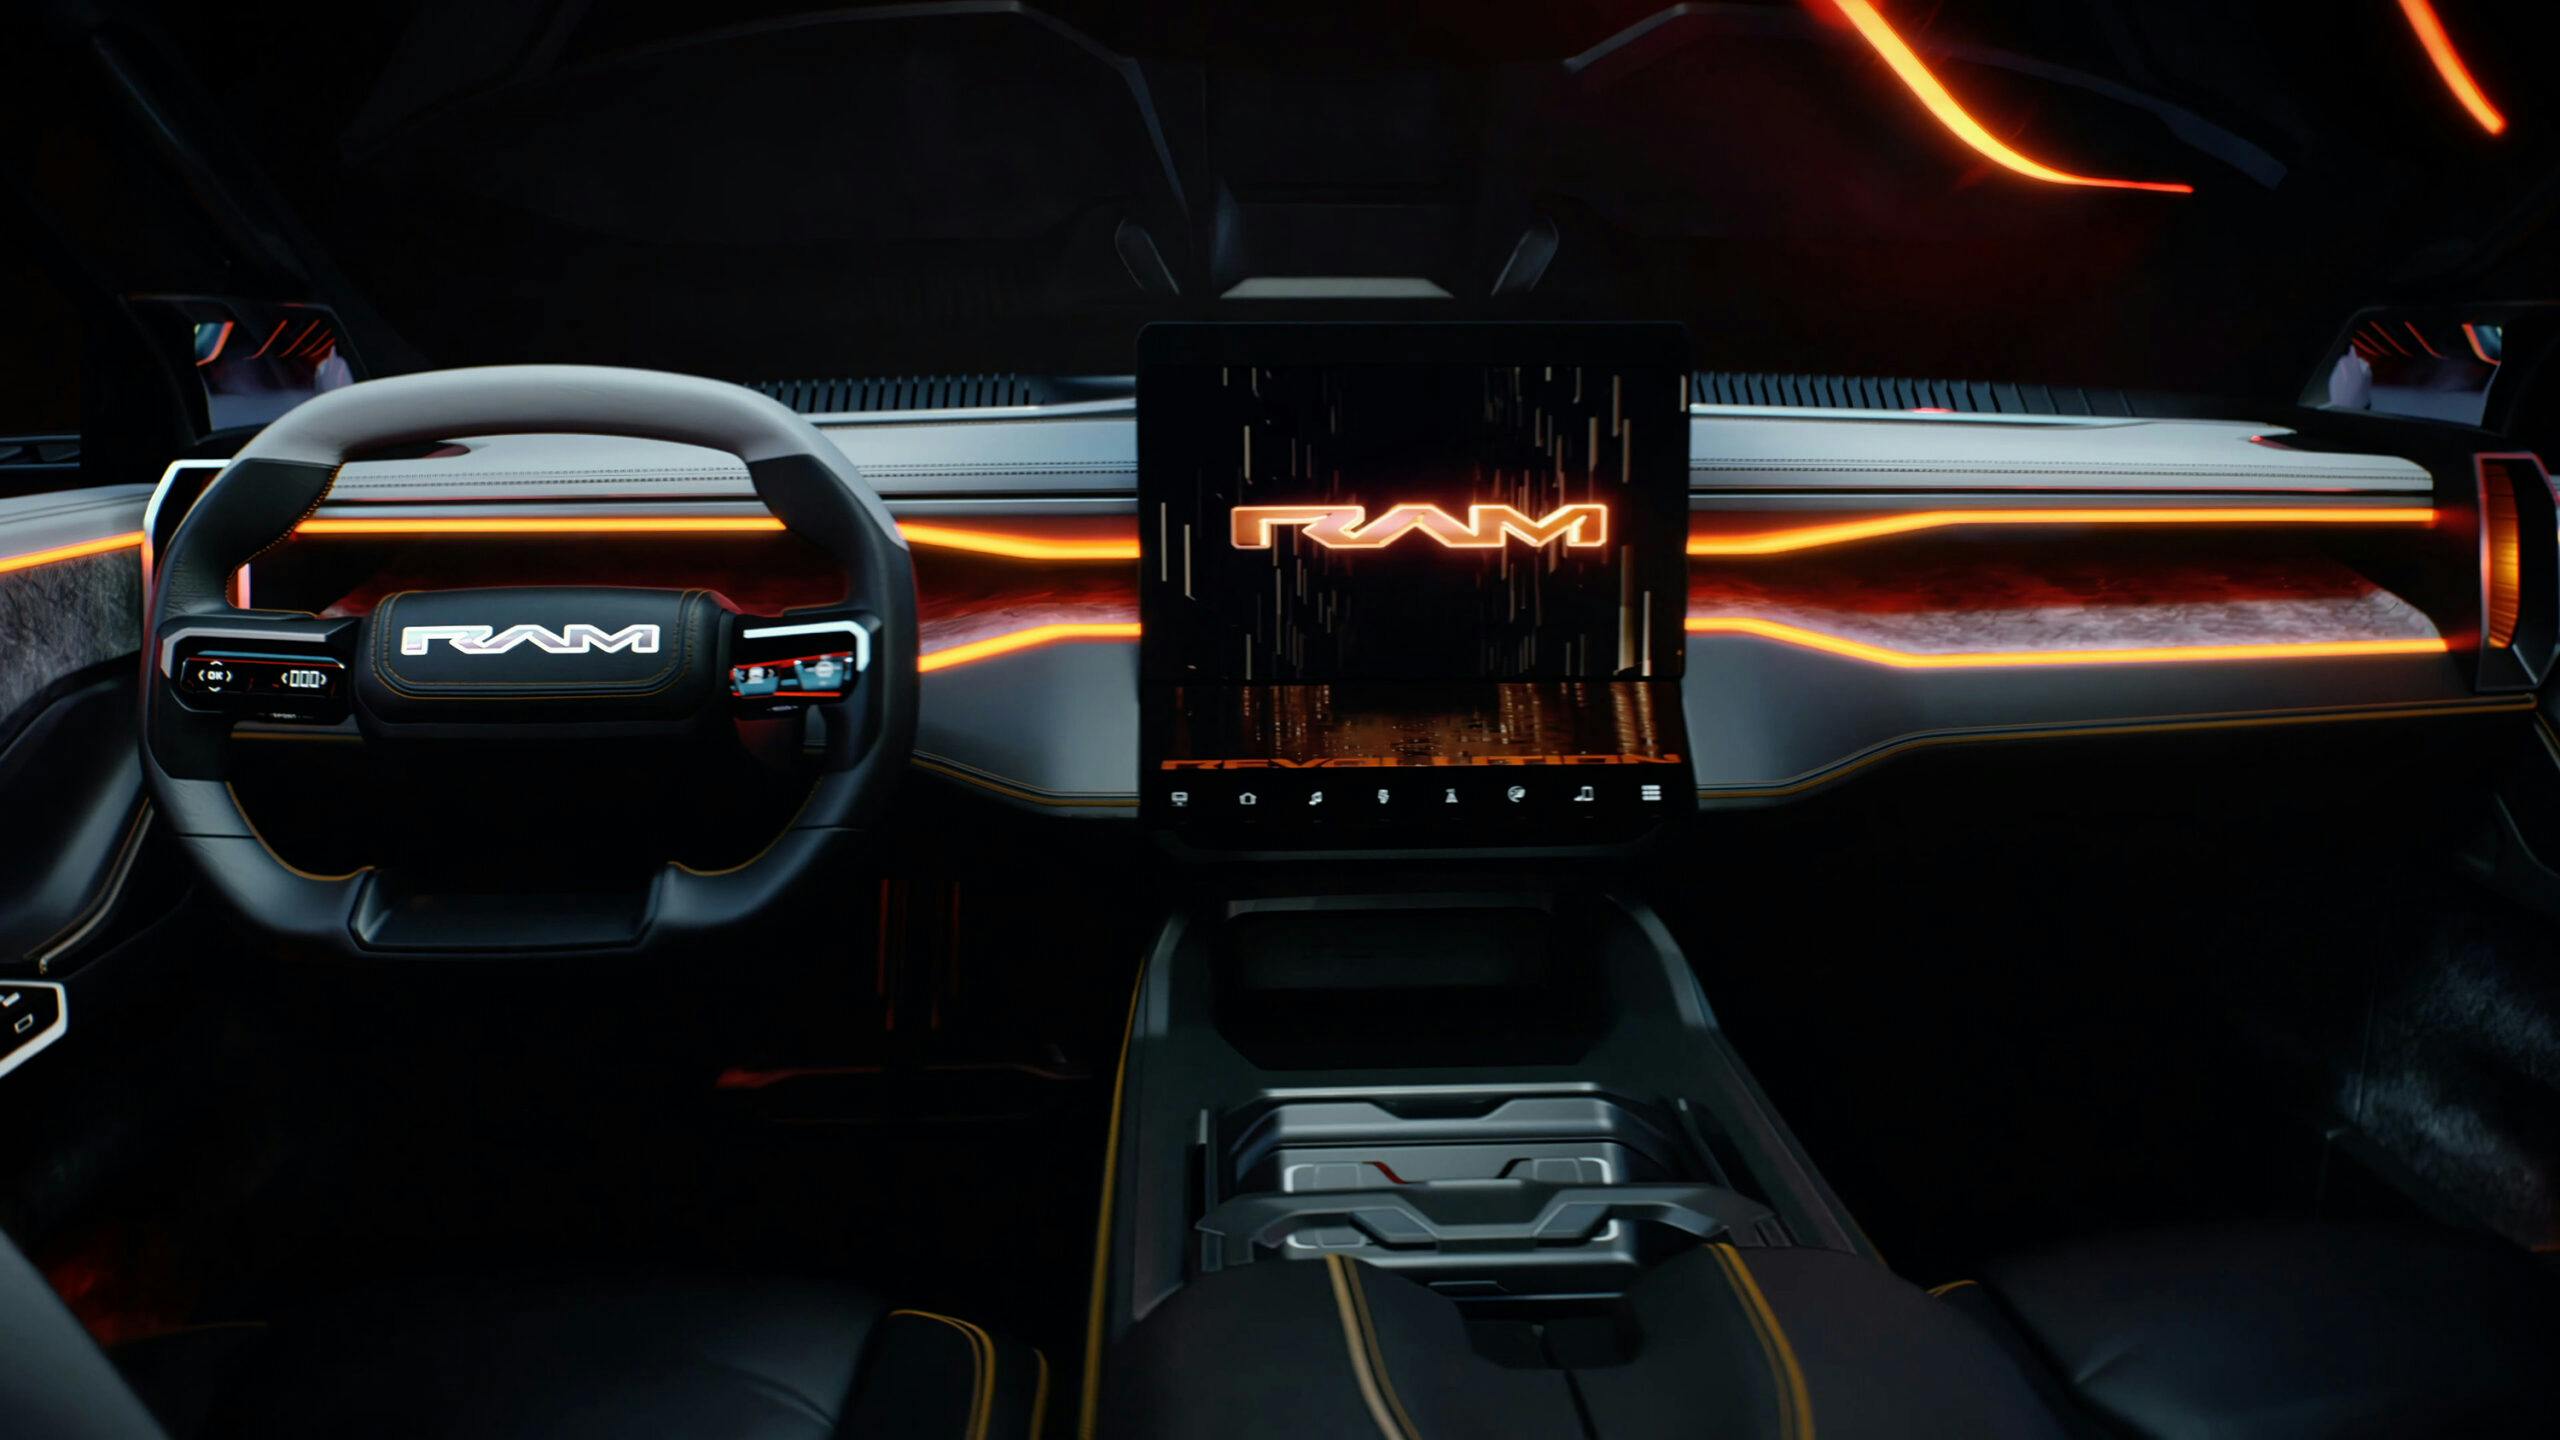 Ram 1500 Revolution Battery-electric Vehicle interior dash front